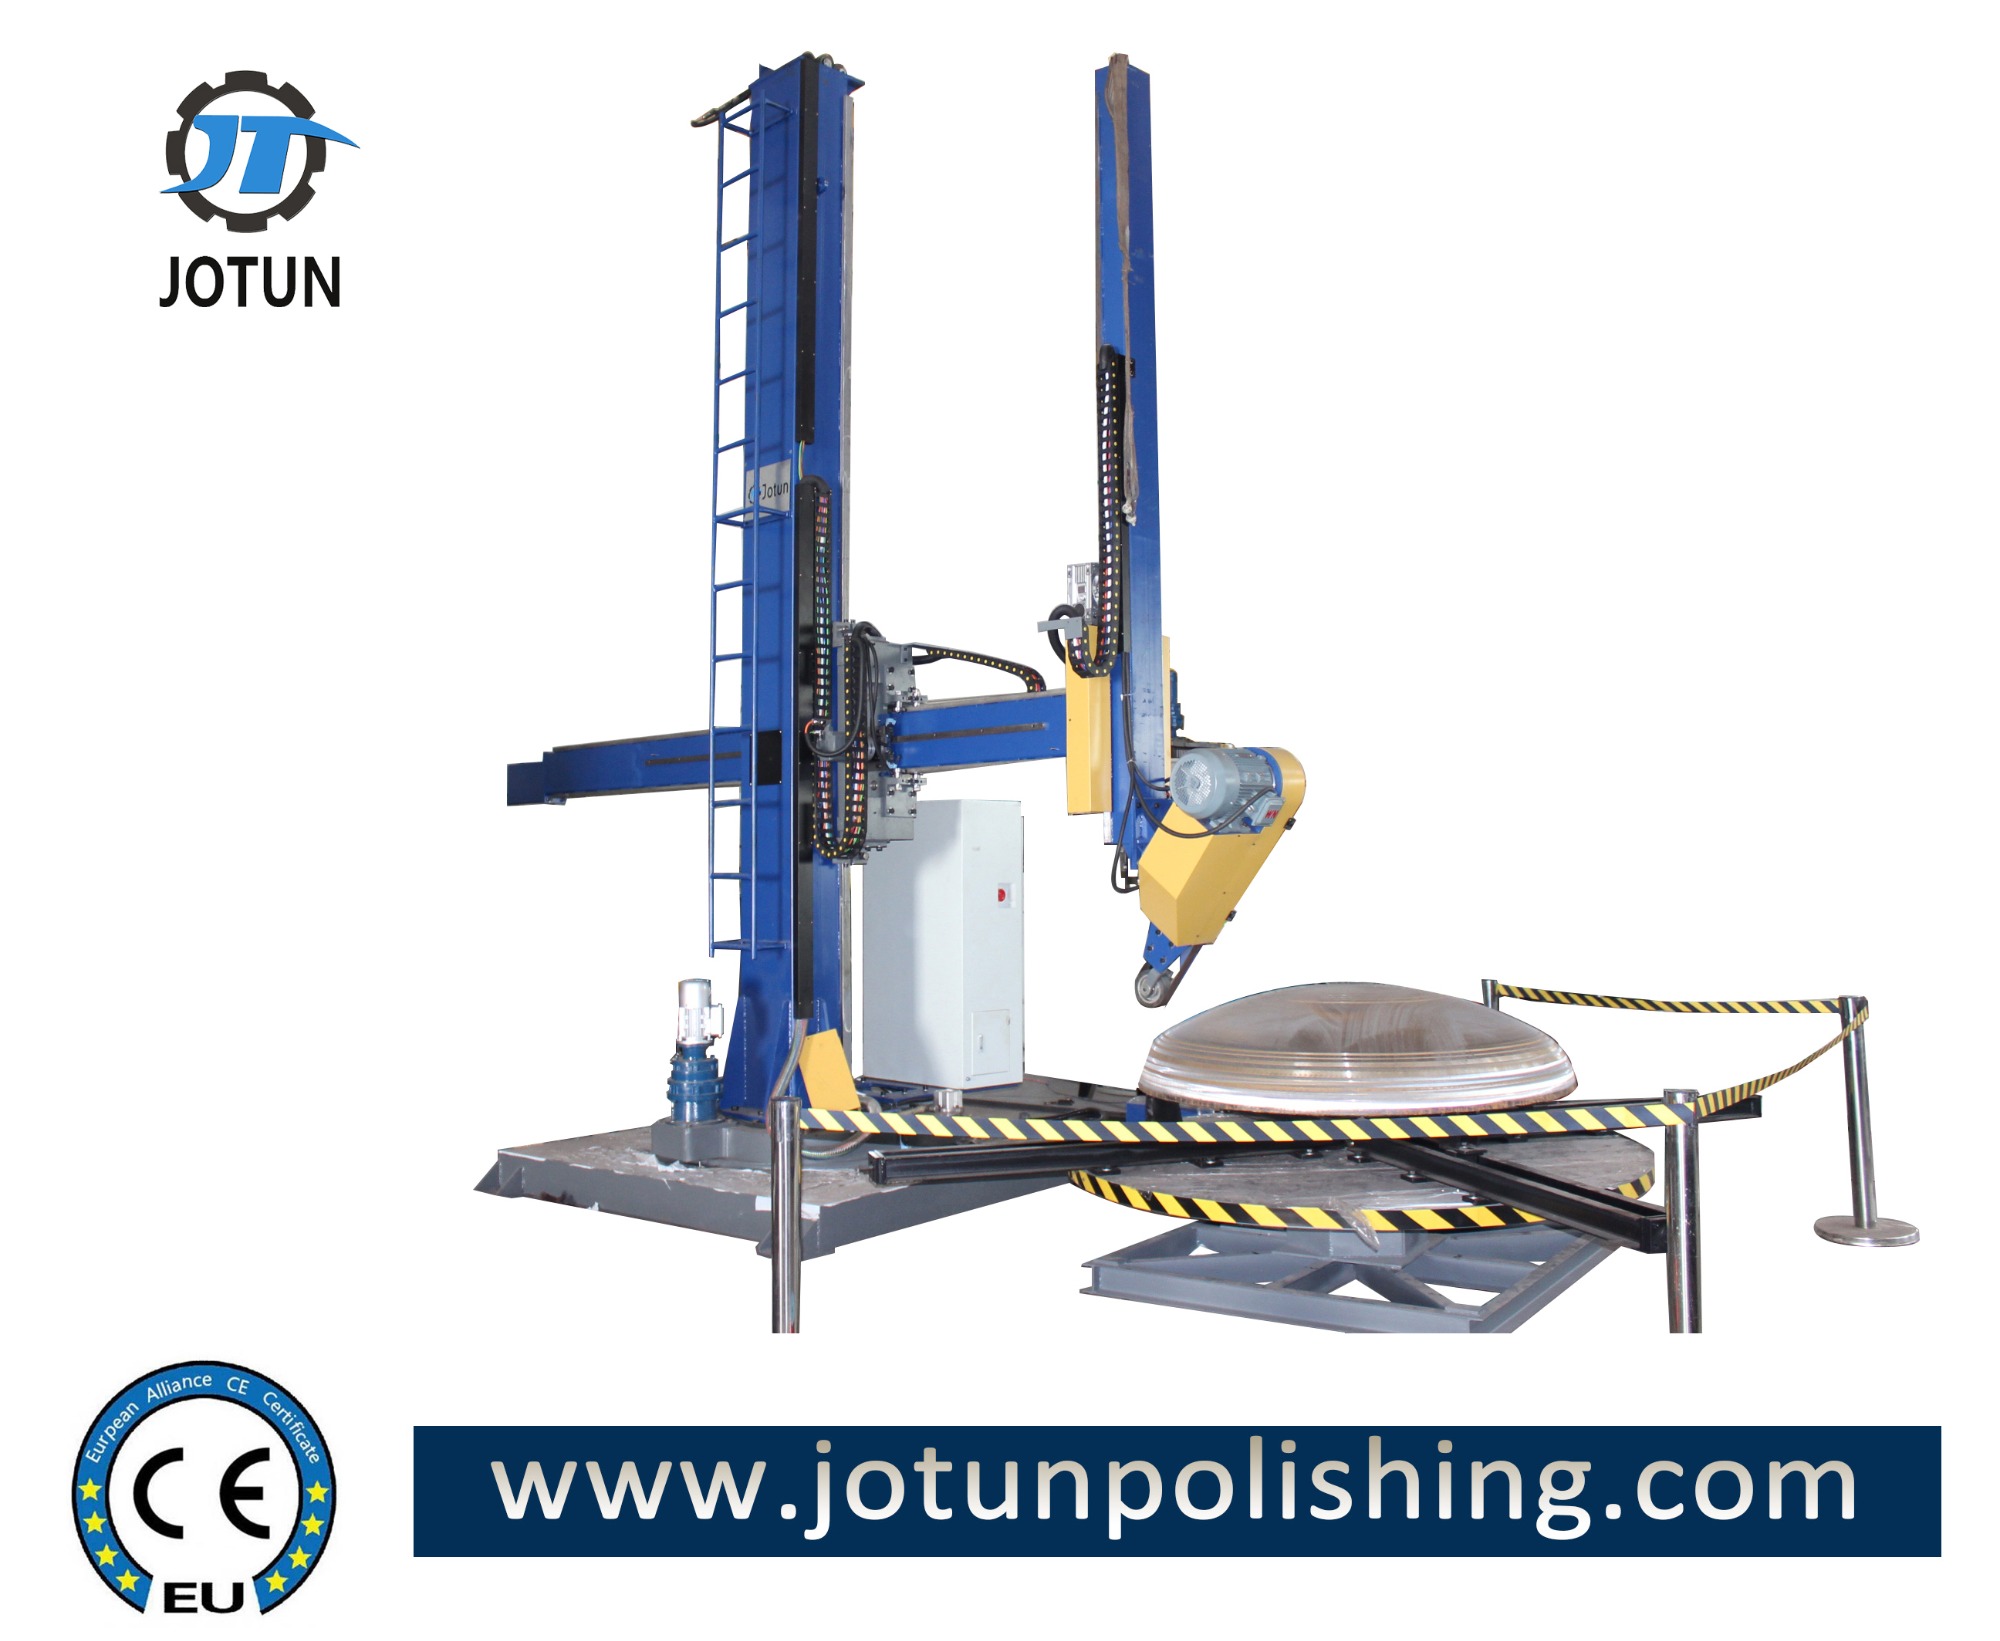 a rotary polishing machine is a powerful tool used for polishing 